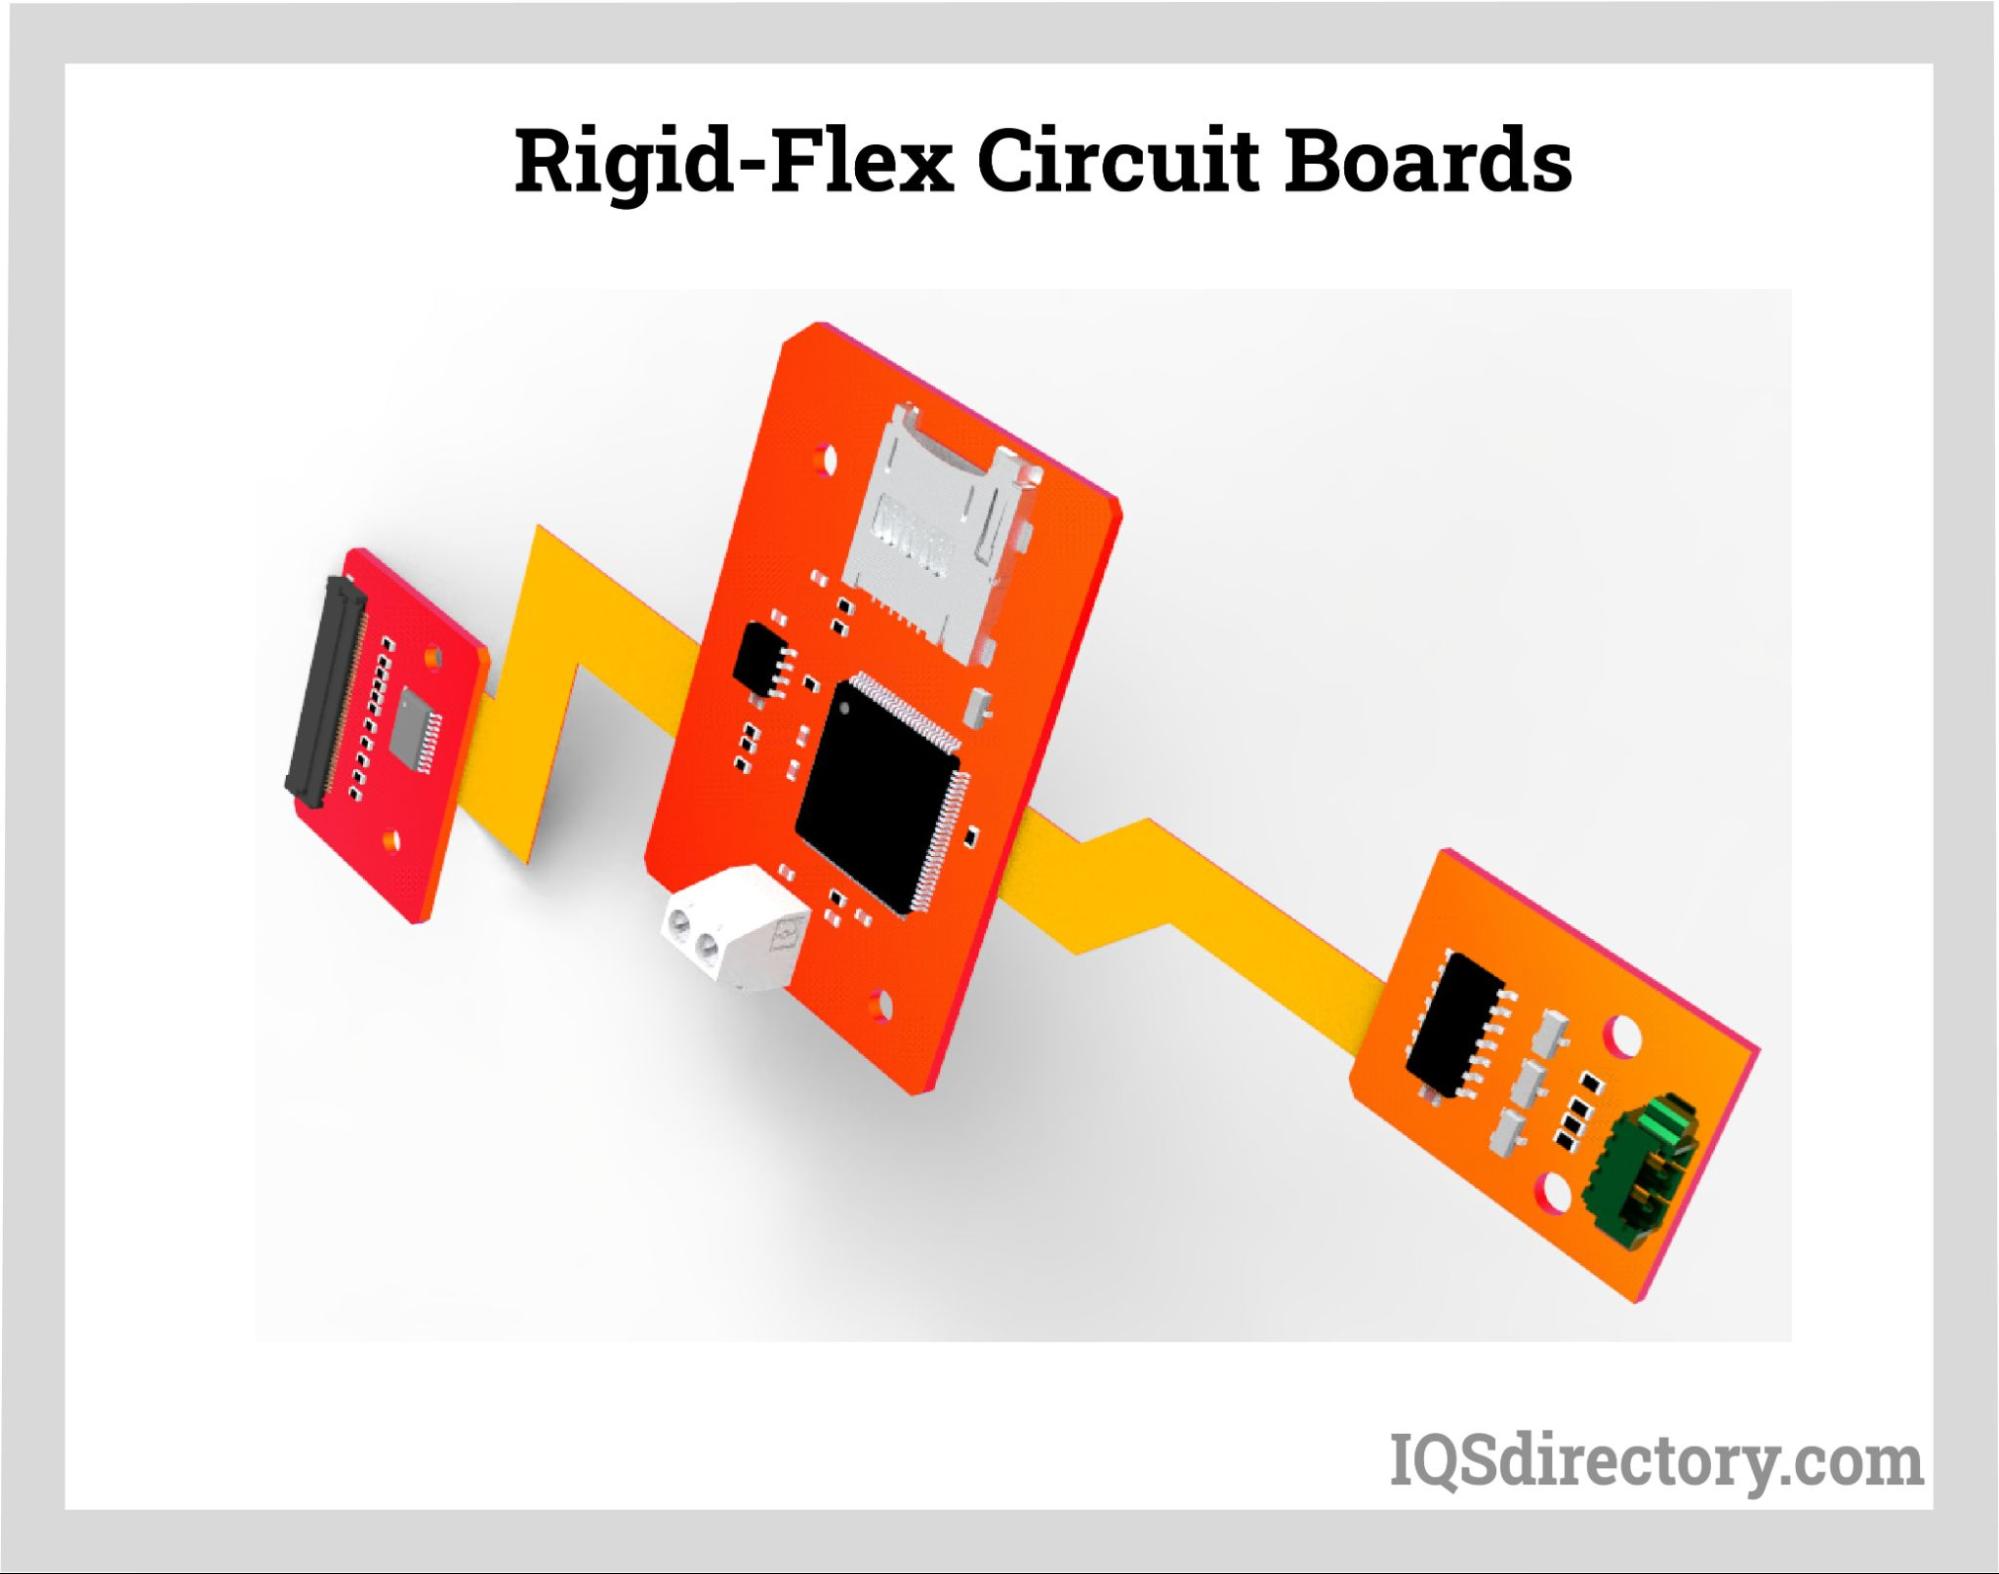 Rigid-flex Circuit Boards